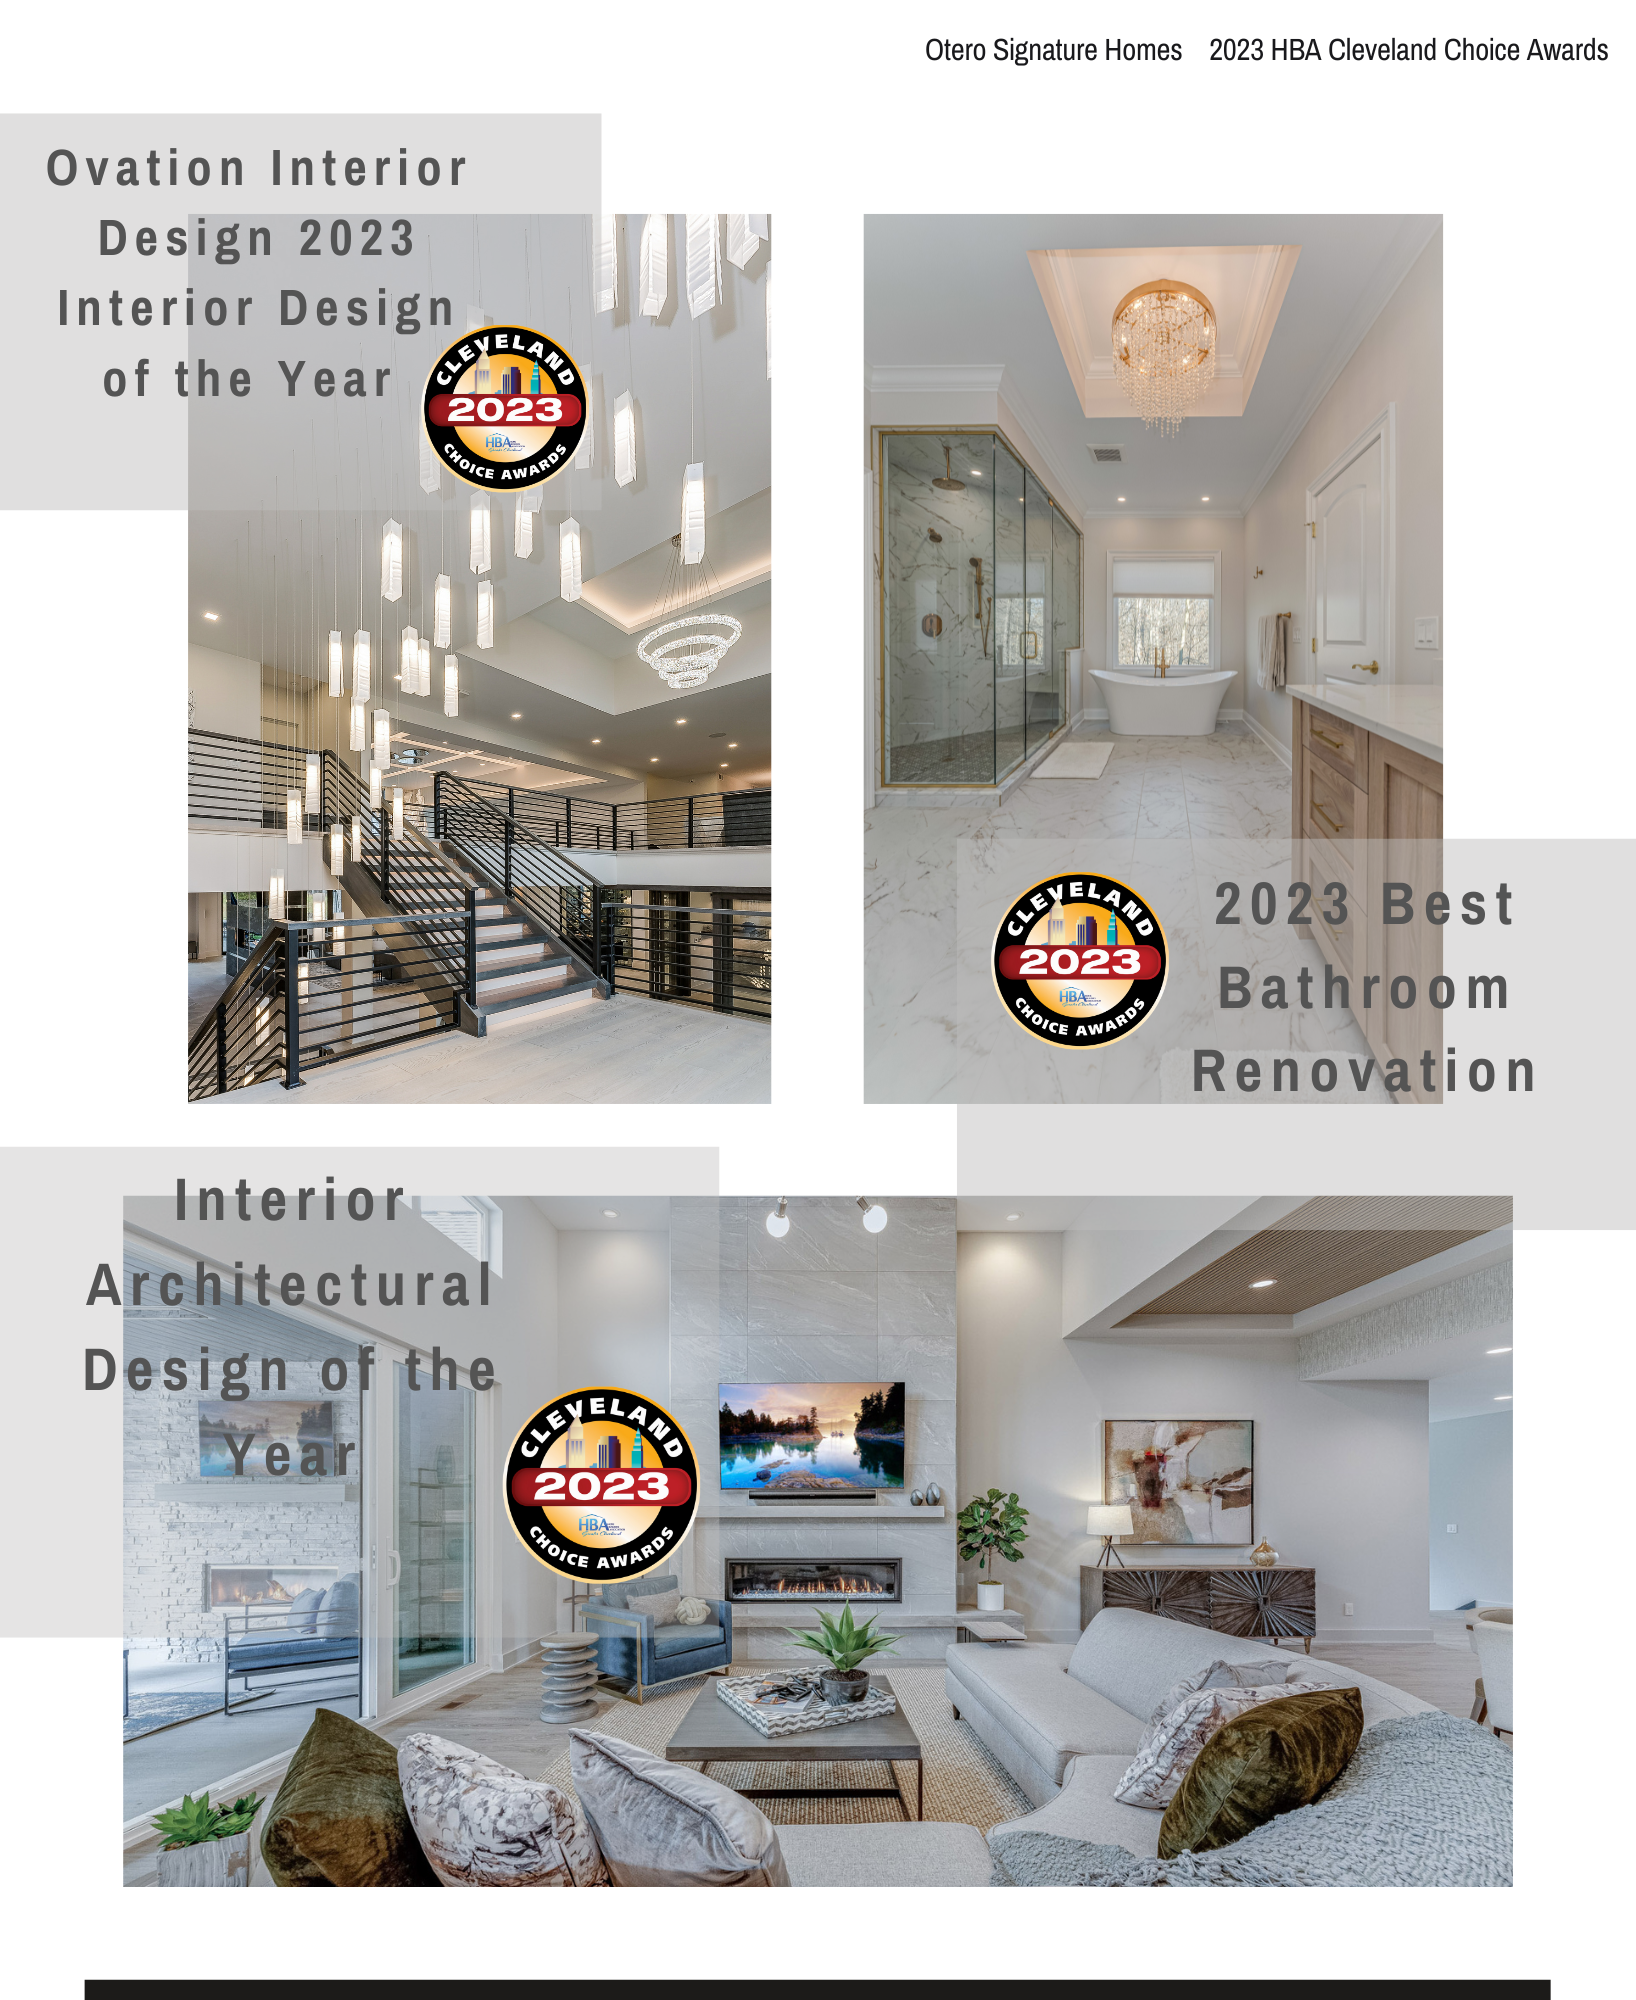 Cleveland 2023 Choice Awards - Interior Design Award for Otero Signature Homes